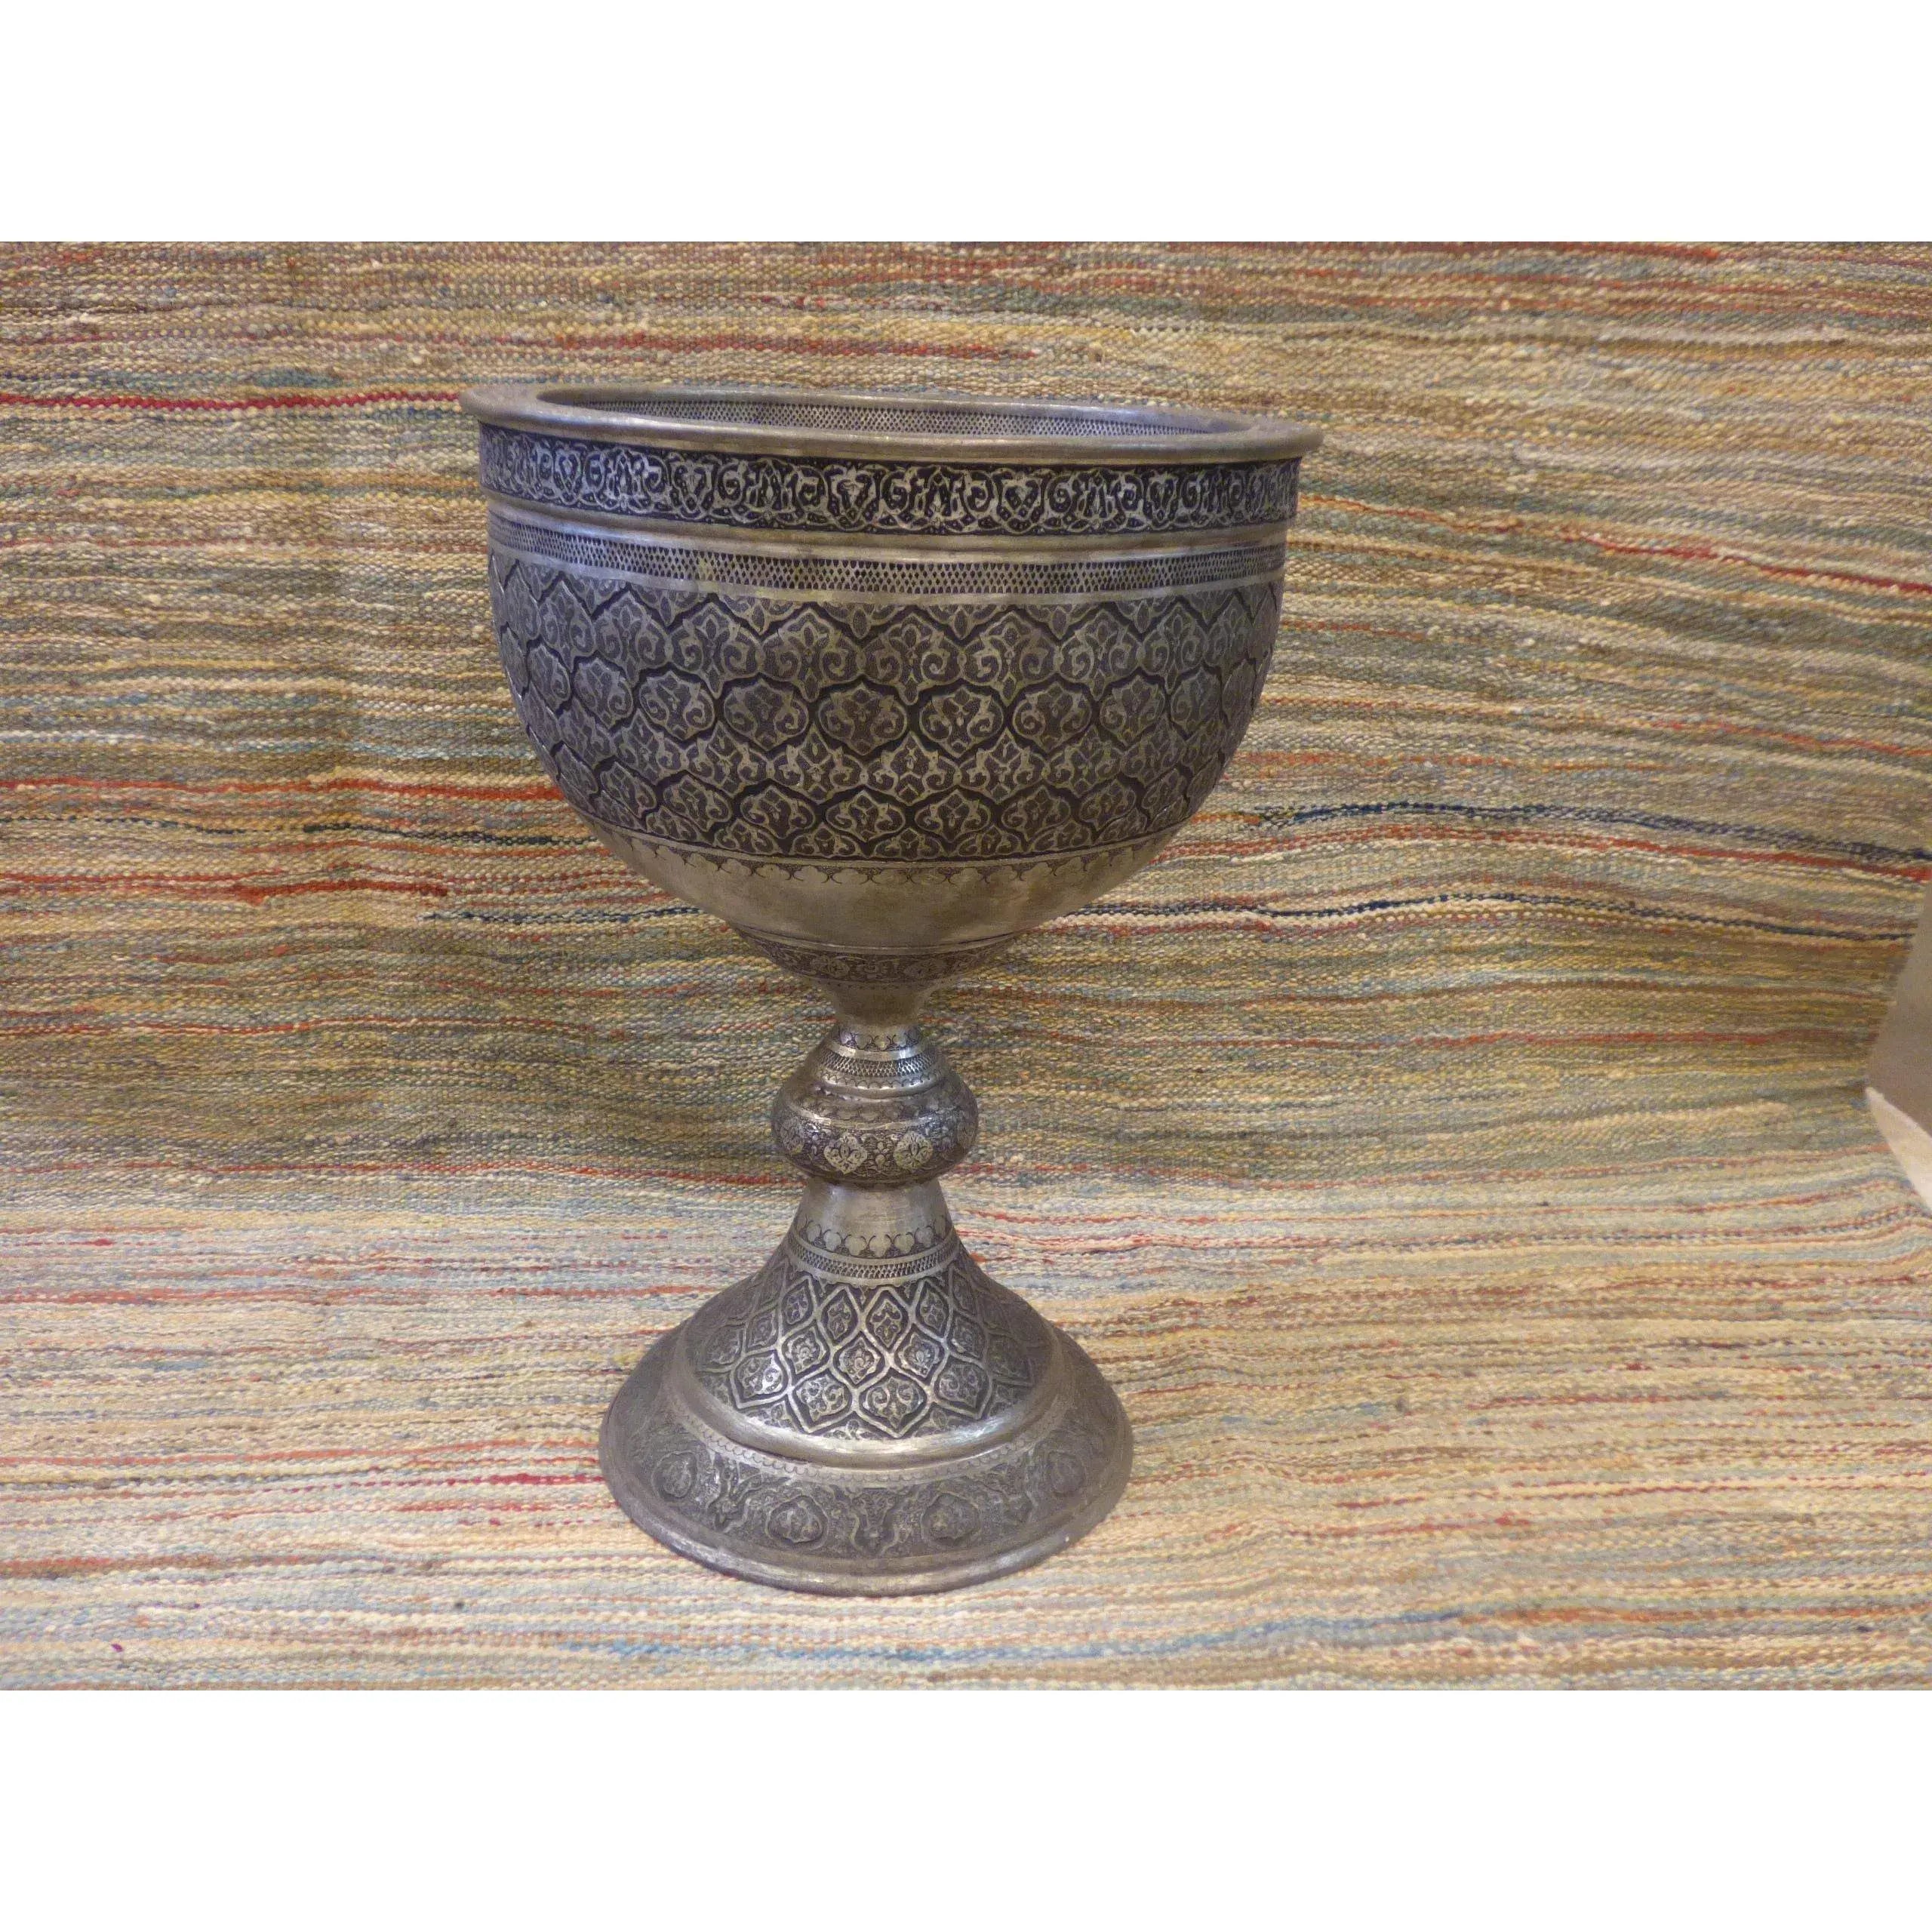 Authentic Art Antique Persian Engraved Brass Vase Ghalamzani 18" X 23" Abcca0106